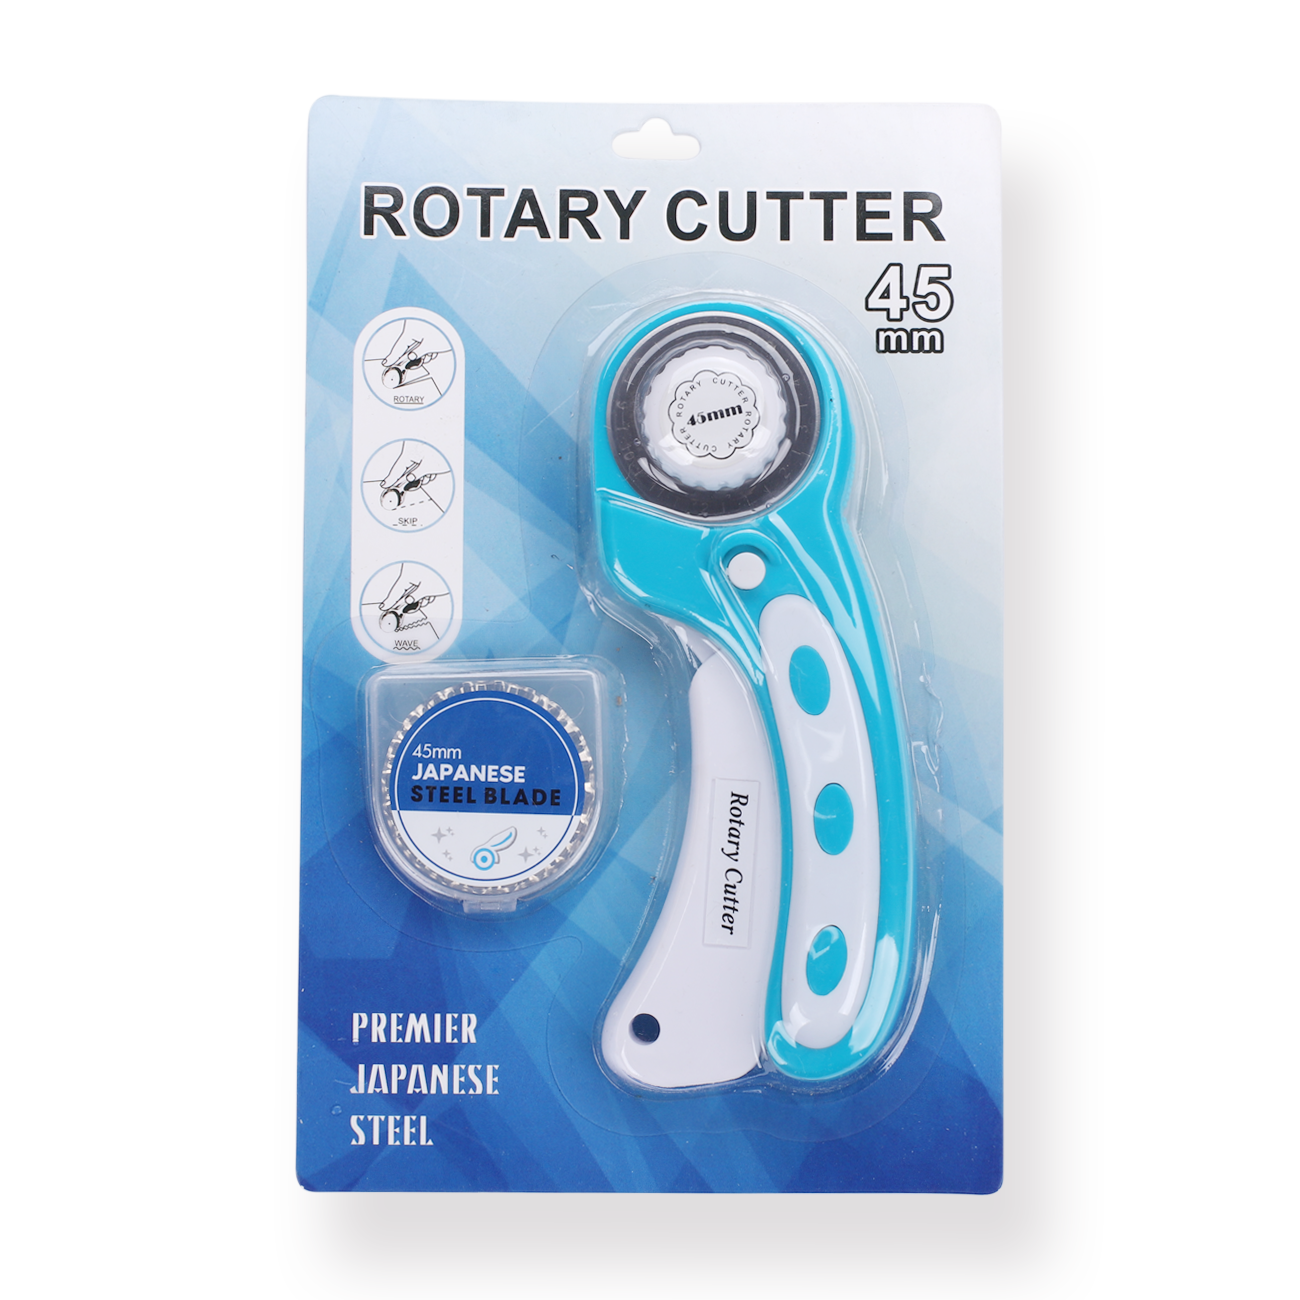  Skip Blade Rotary Cutter